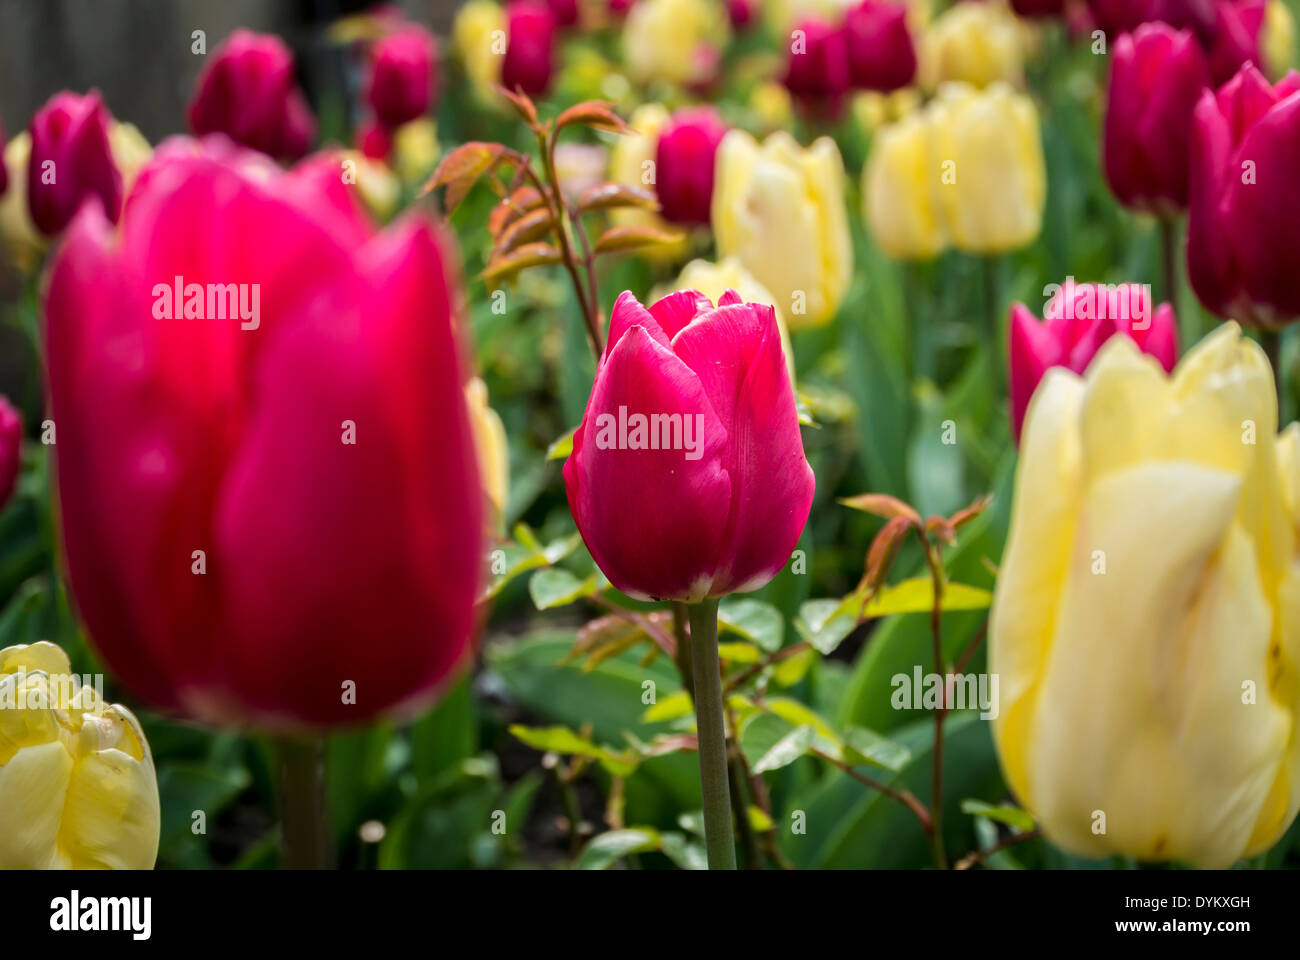 Tulips flowering Stock Photo